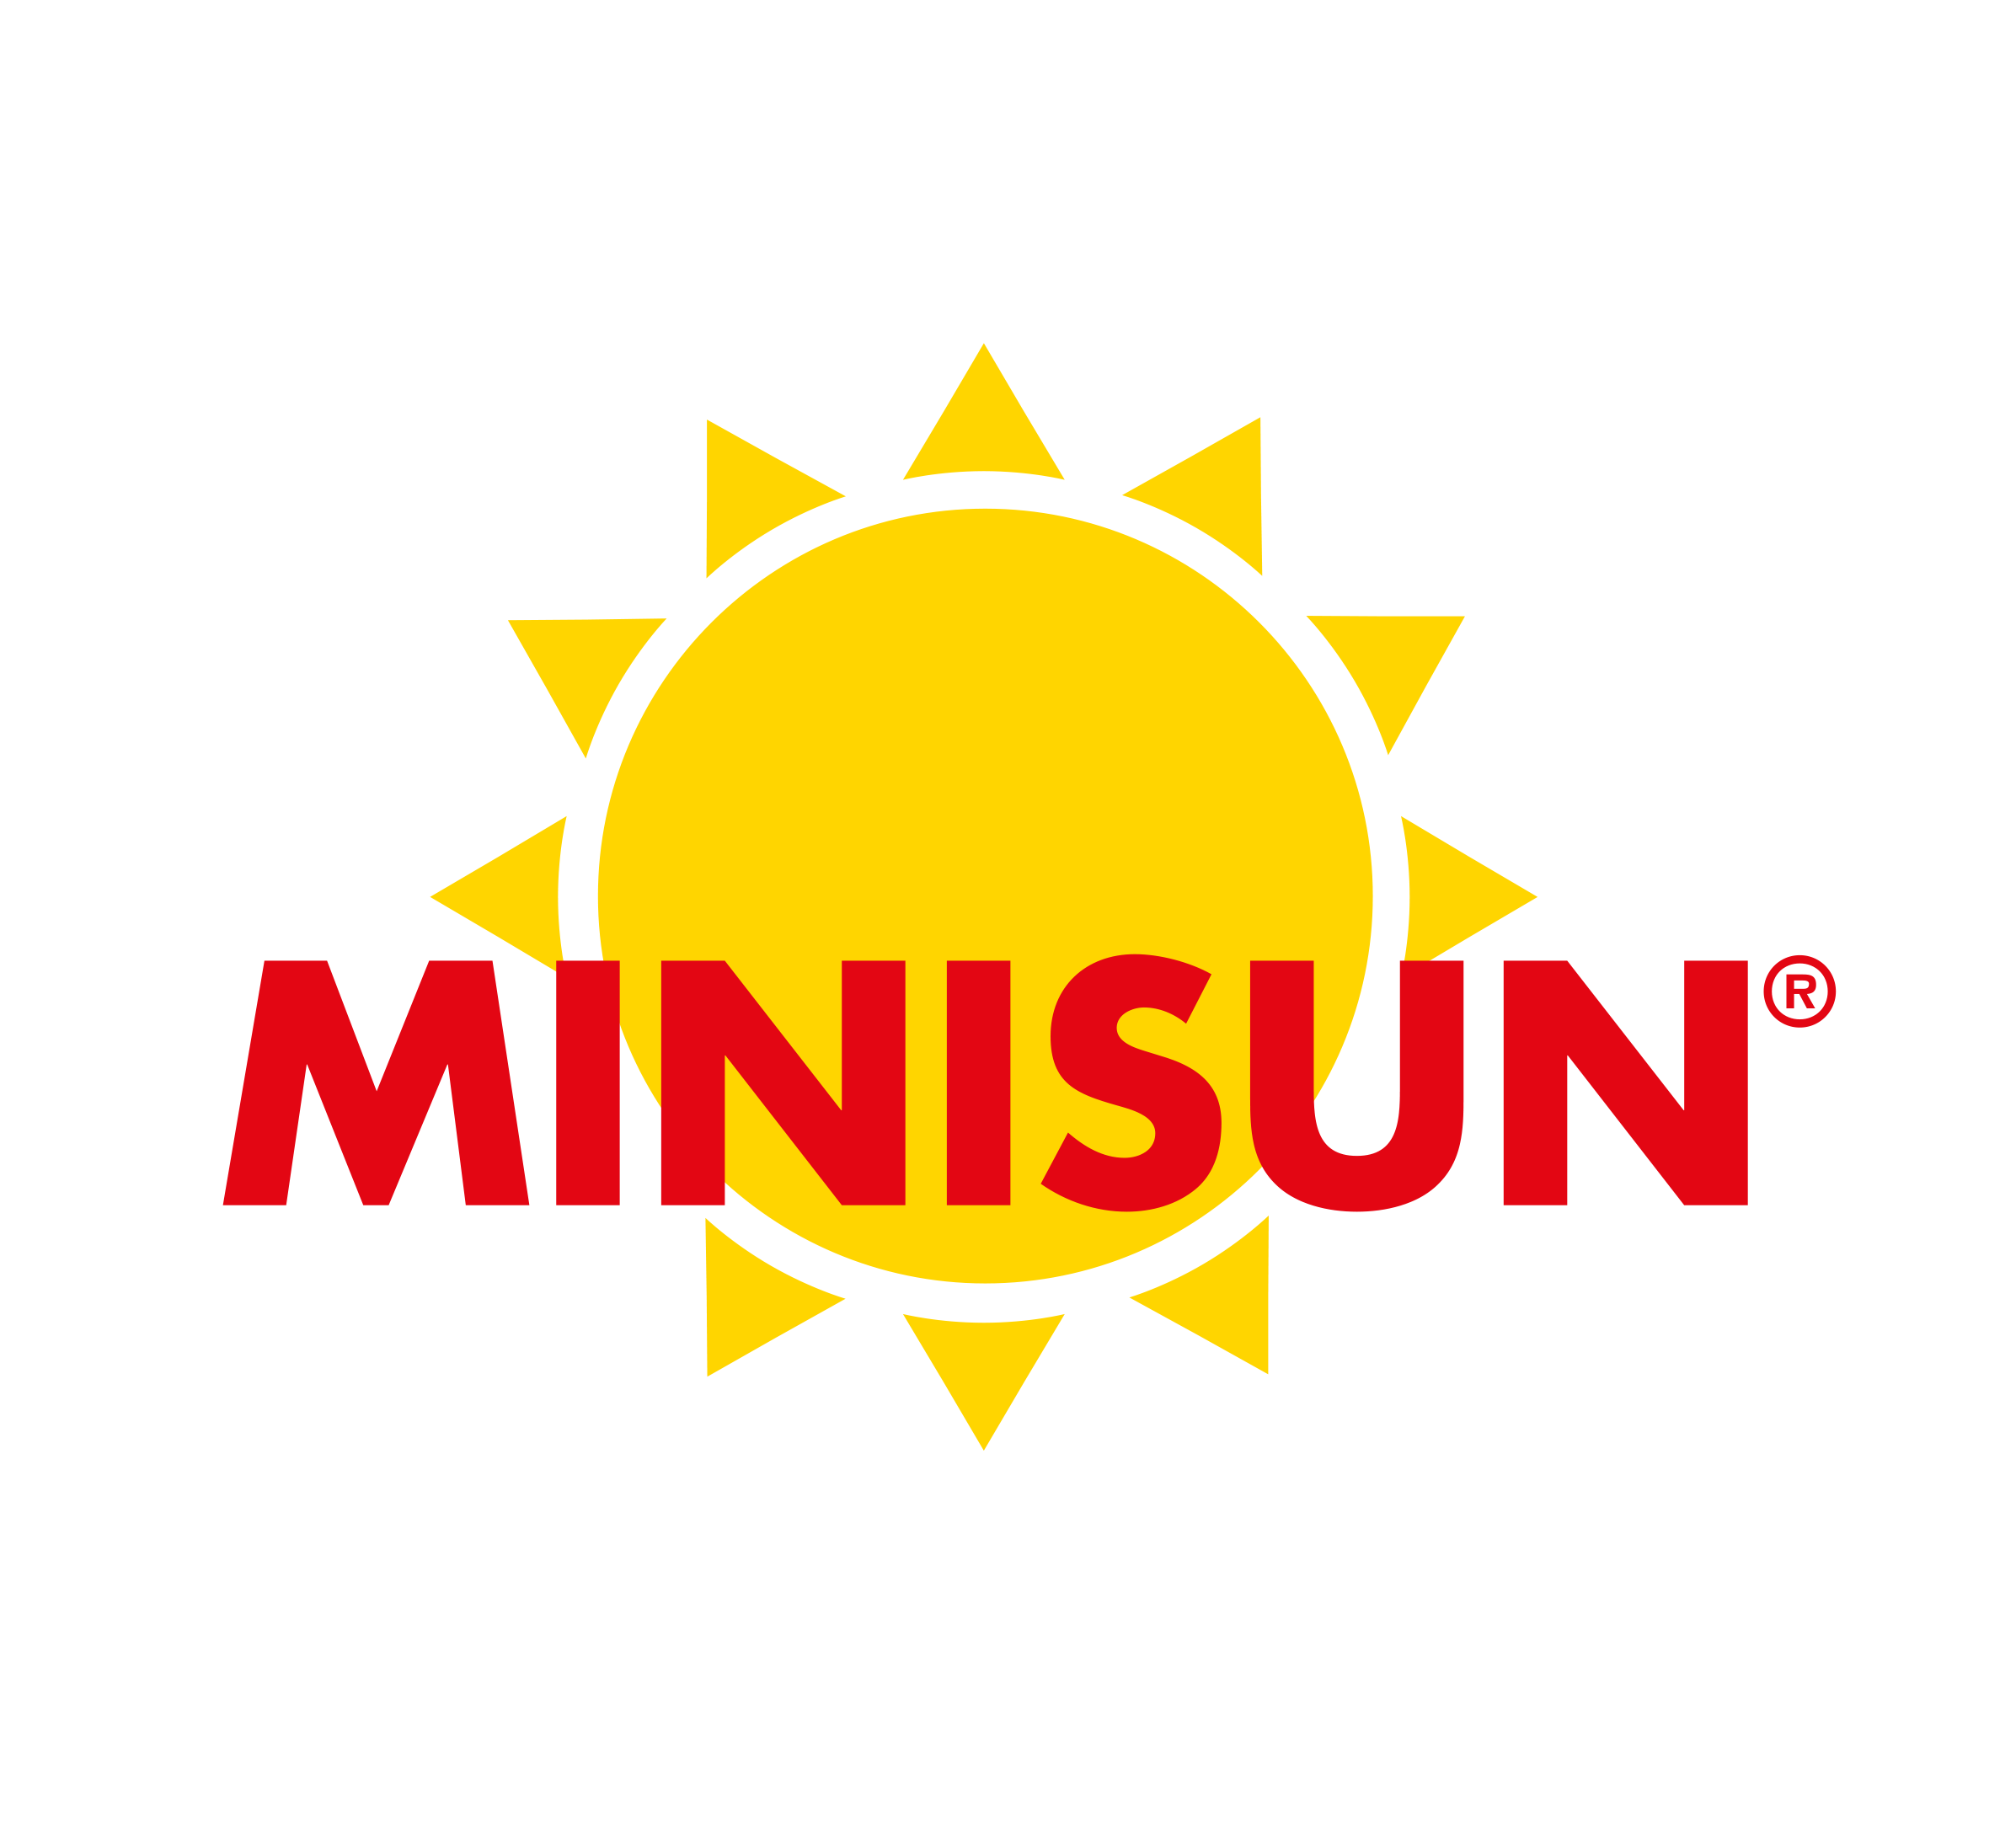 Minisun